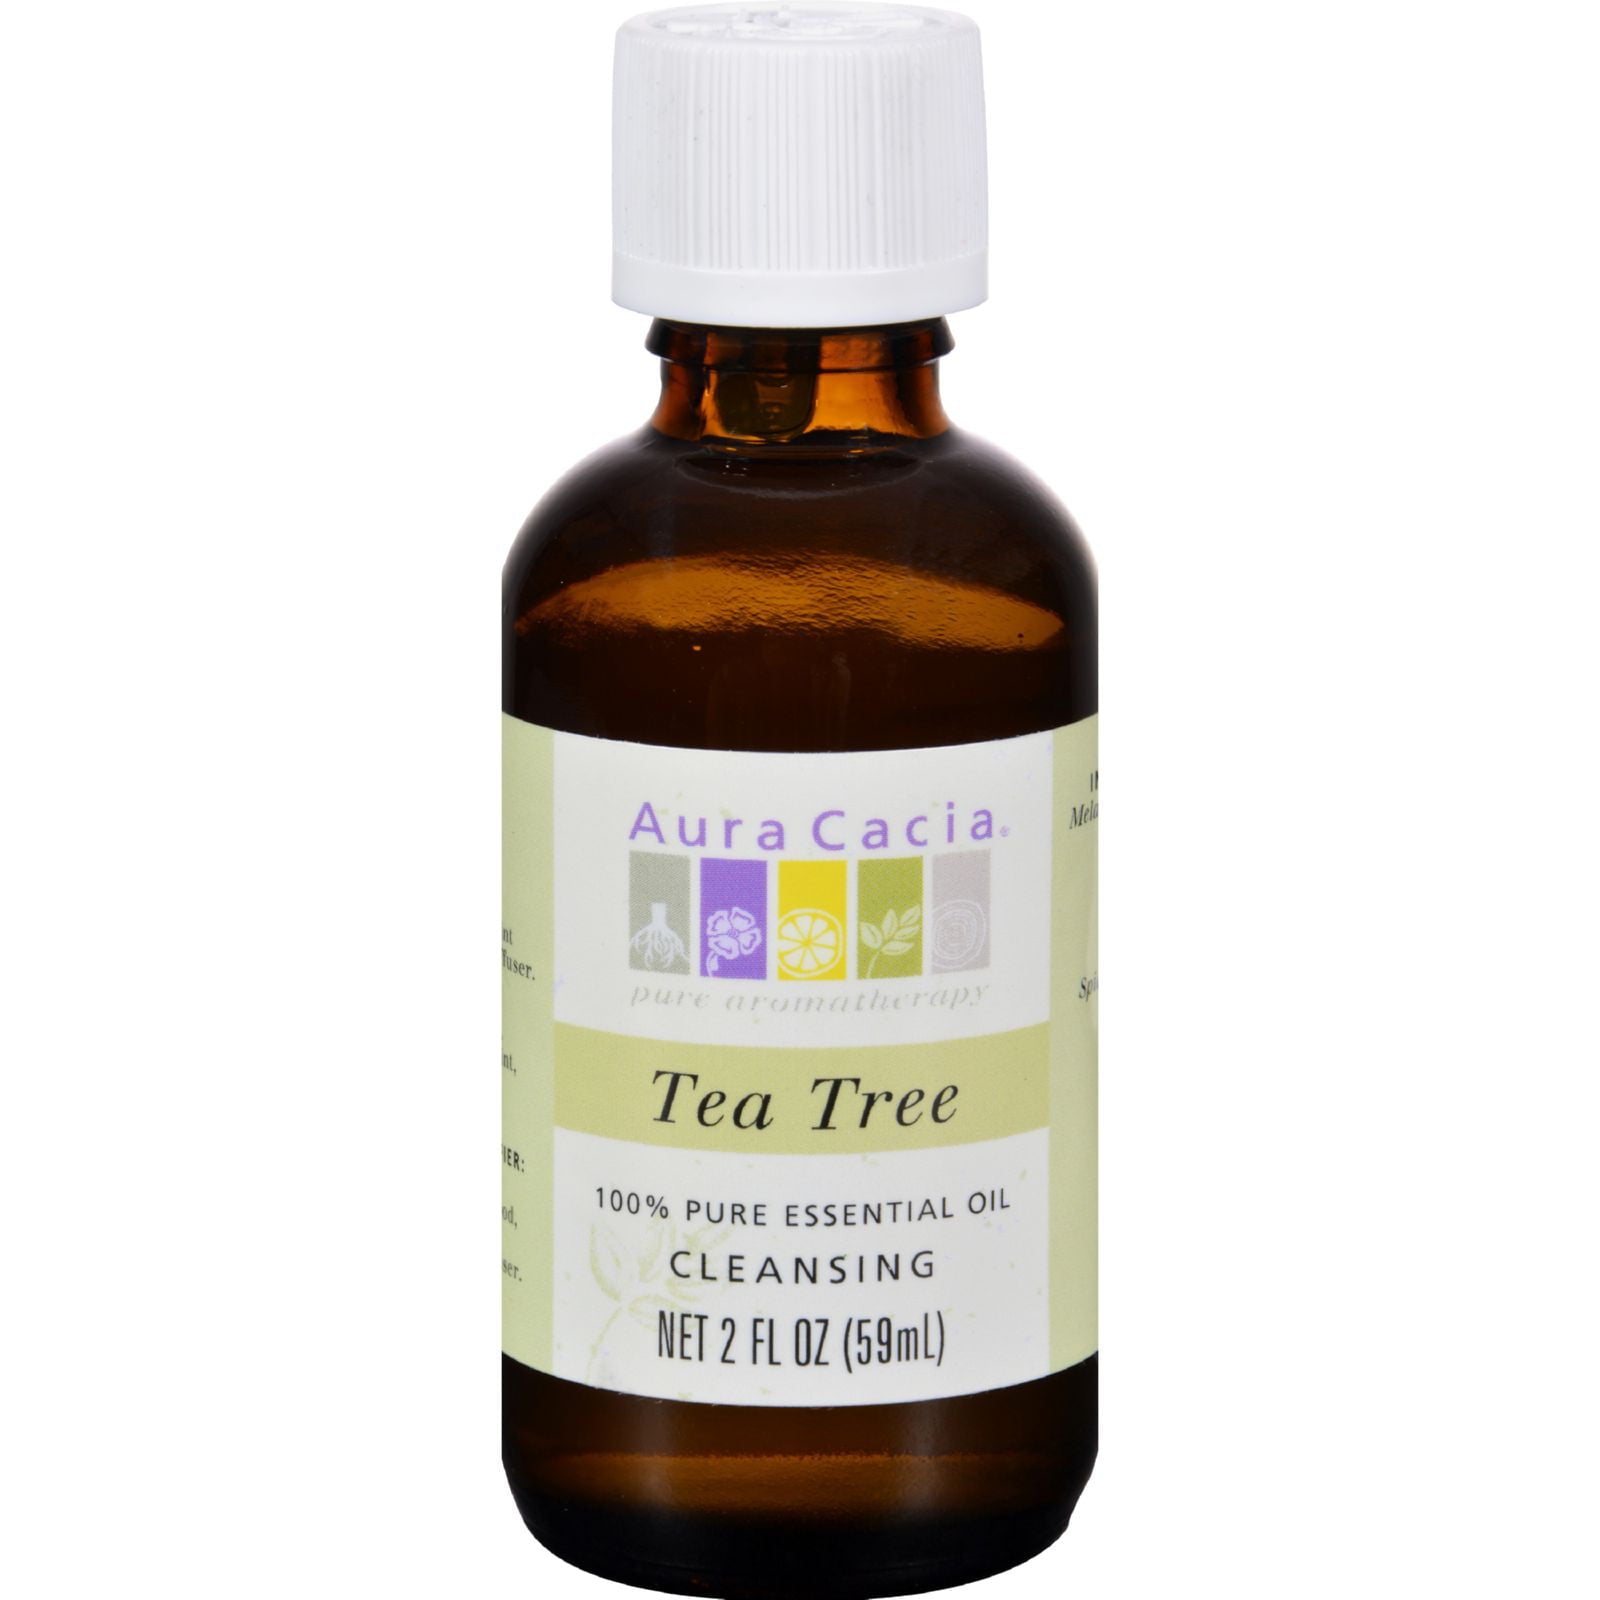 Aura Cacia 100% Pure Essential Oil Tea Tree 2 fl oz